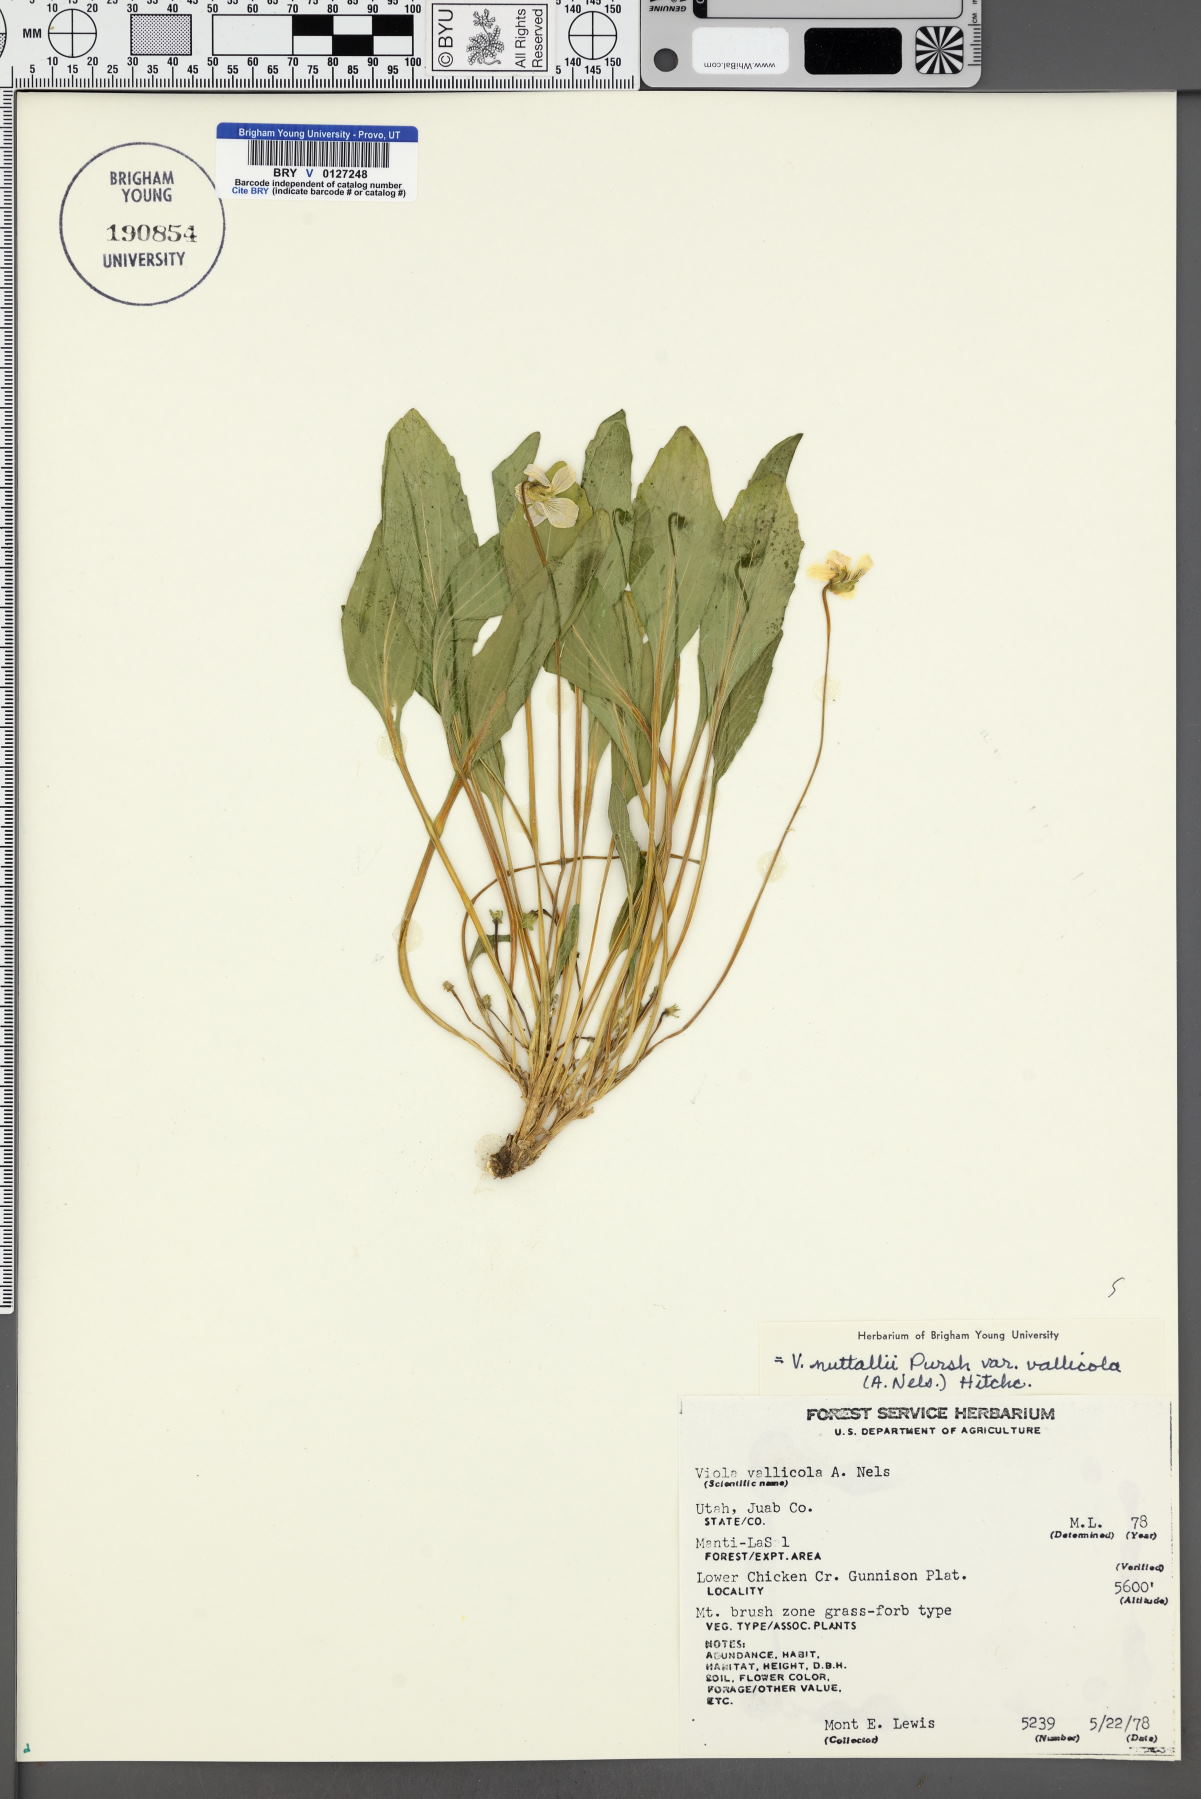 Viola vallicola var. vallicola image